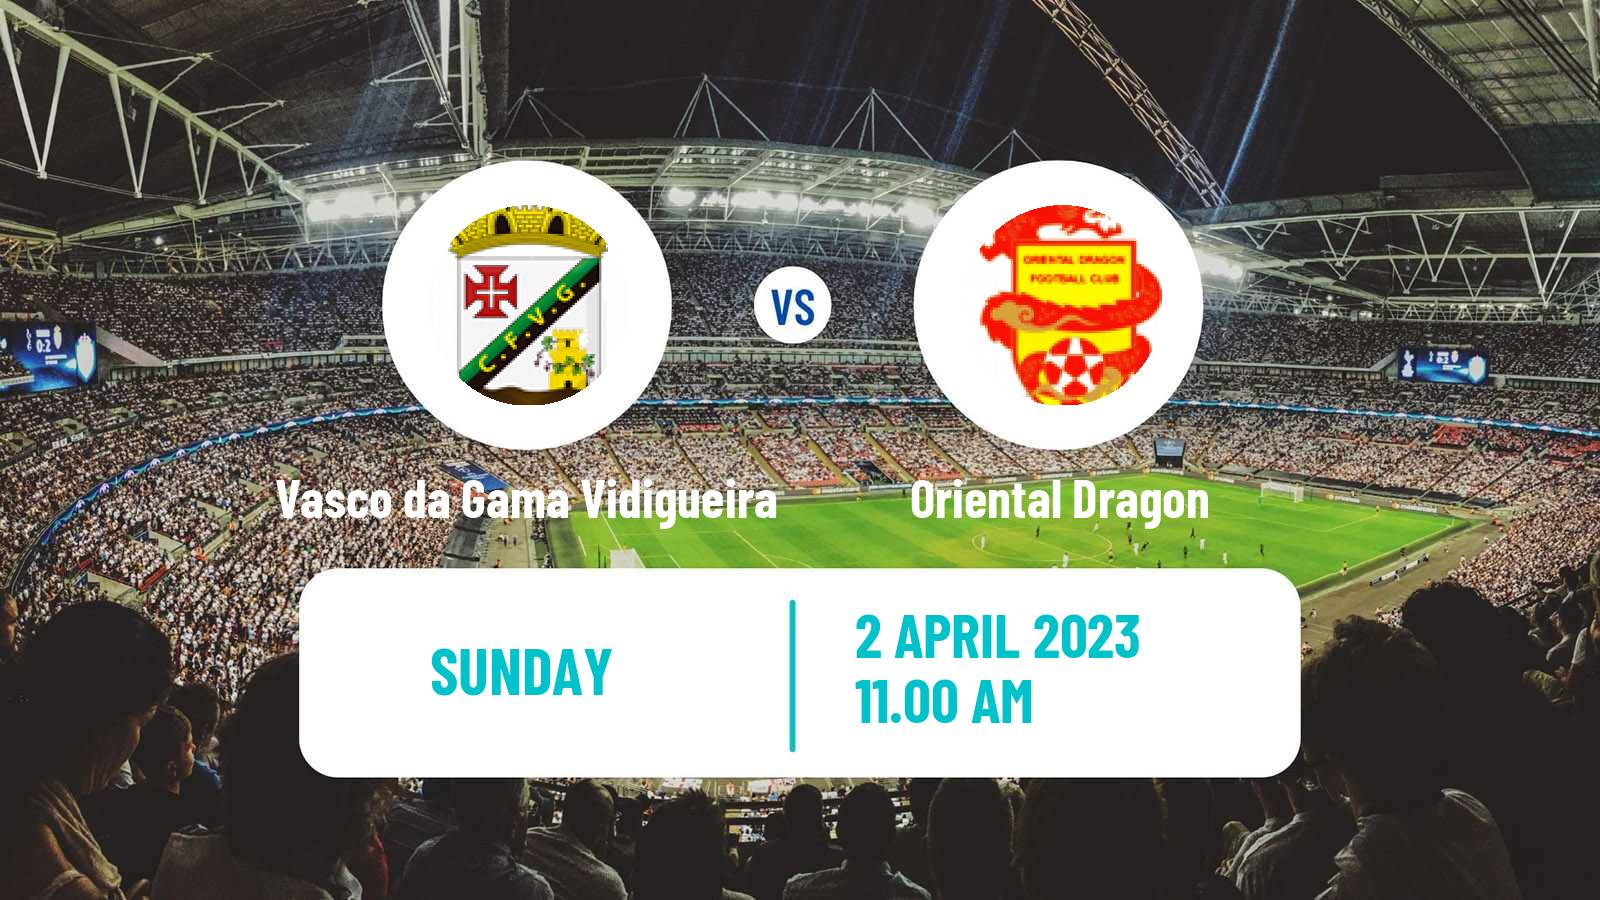 Soccer Campeonato de Portugal Vasco da Gama Vidigueira - Oriental Dragon